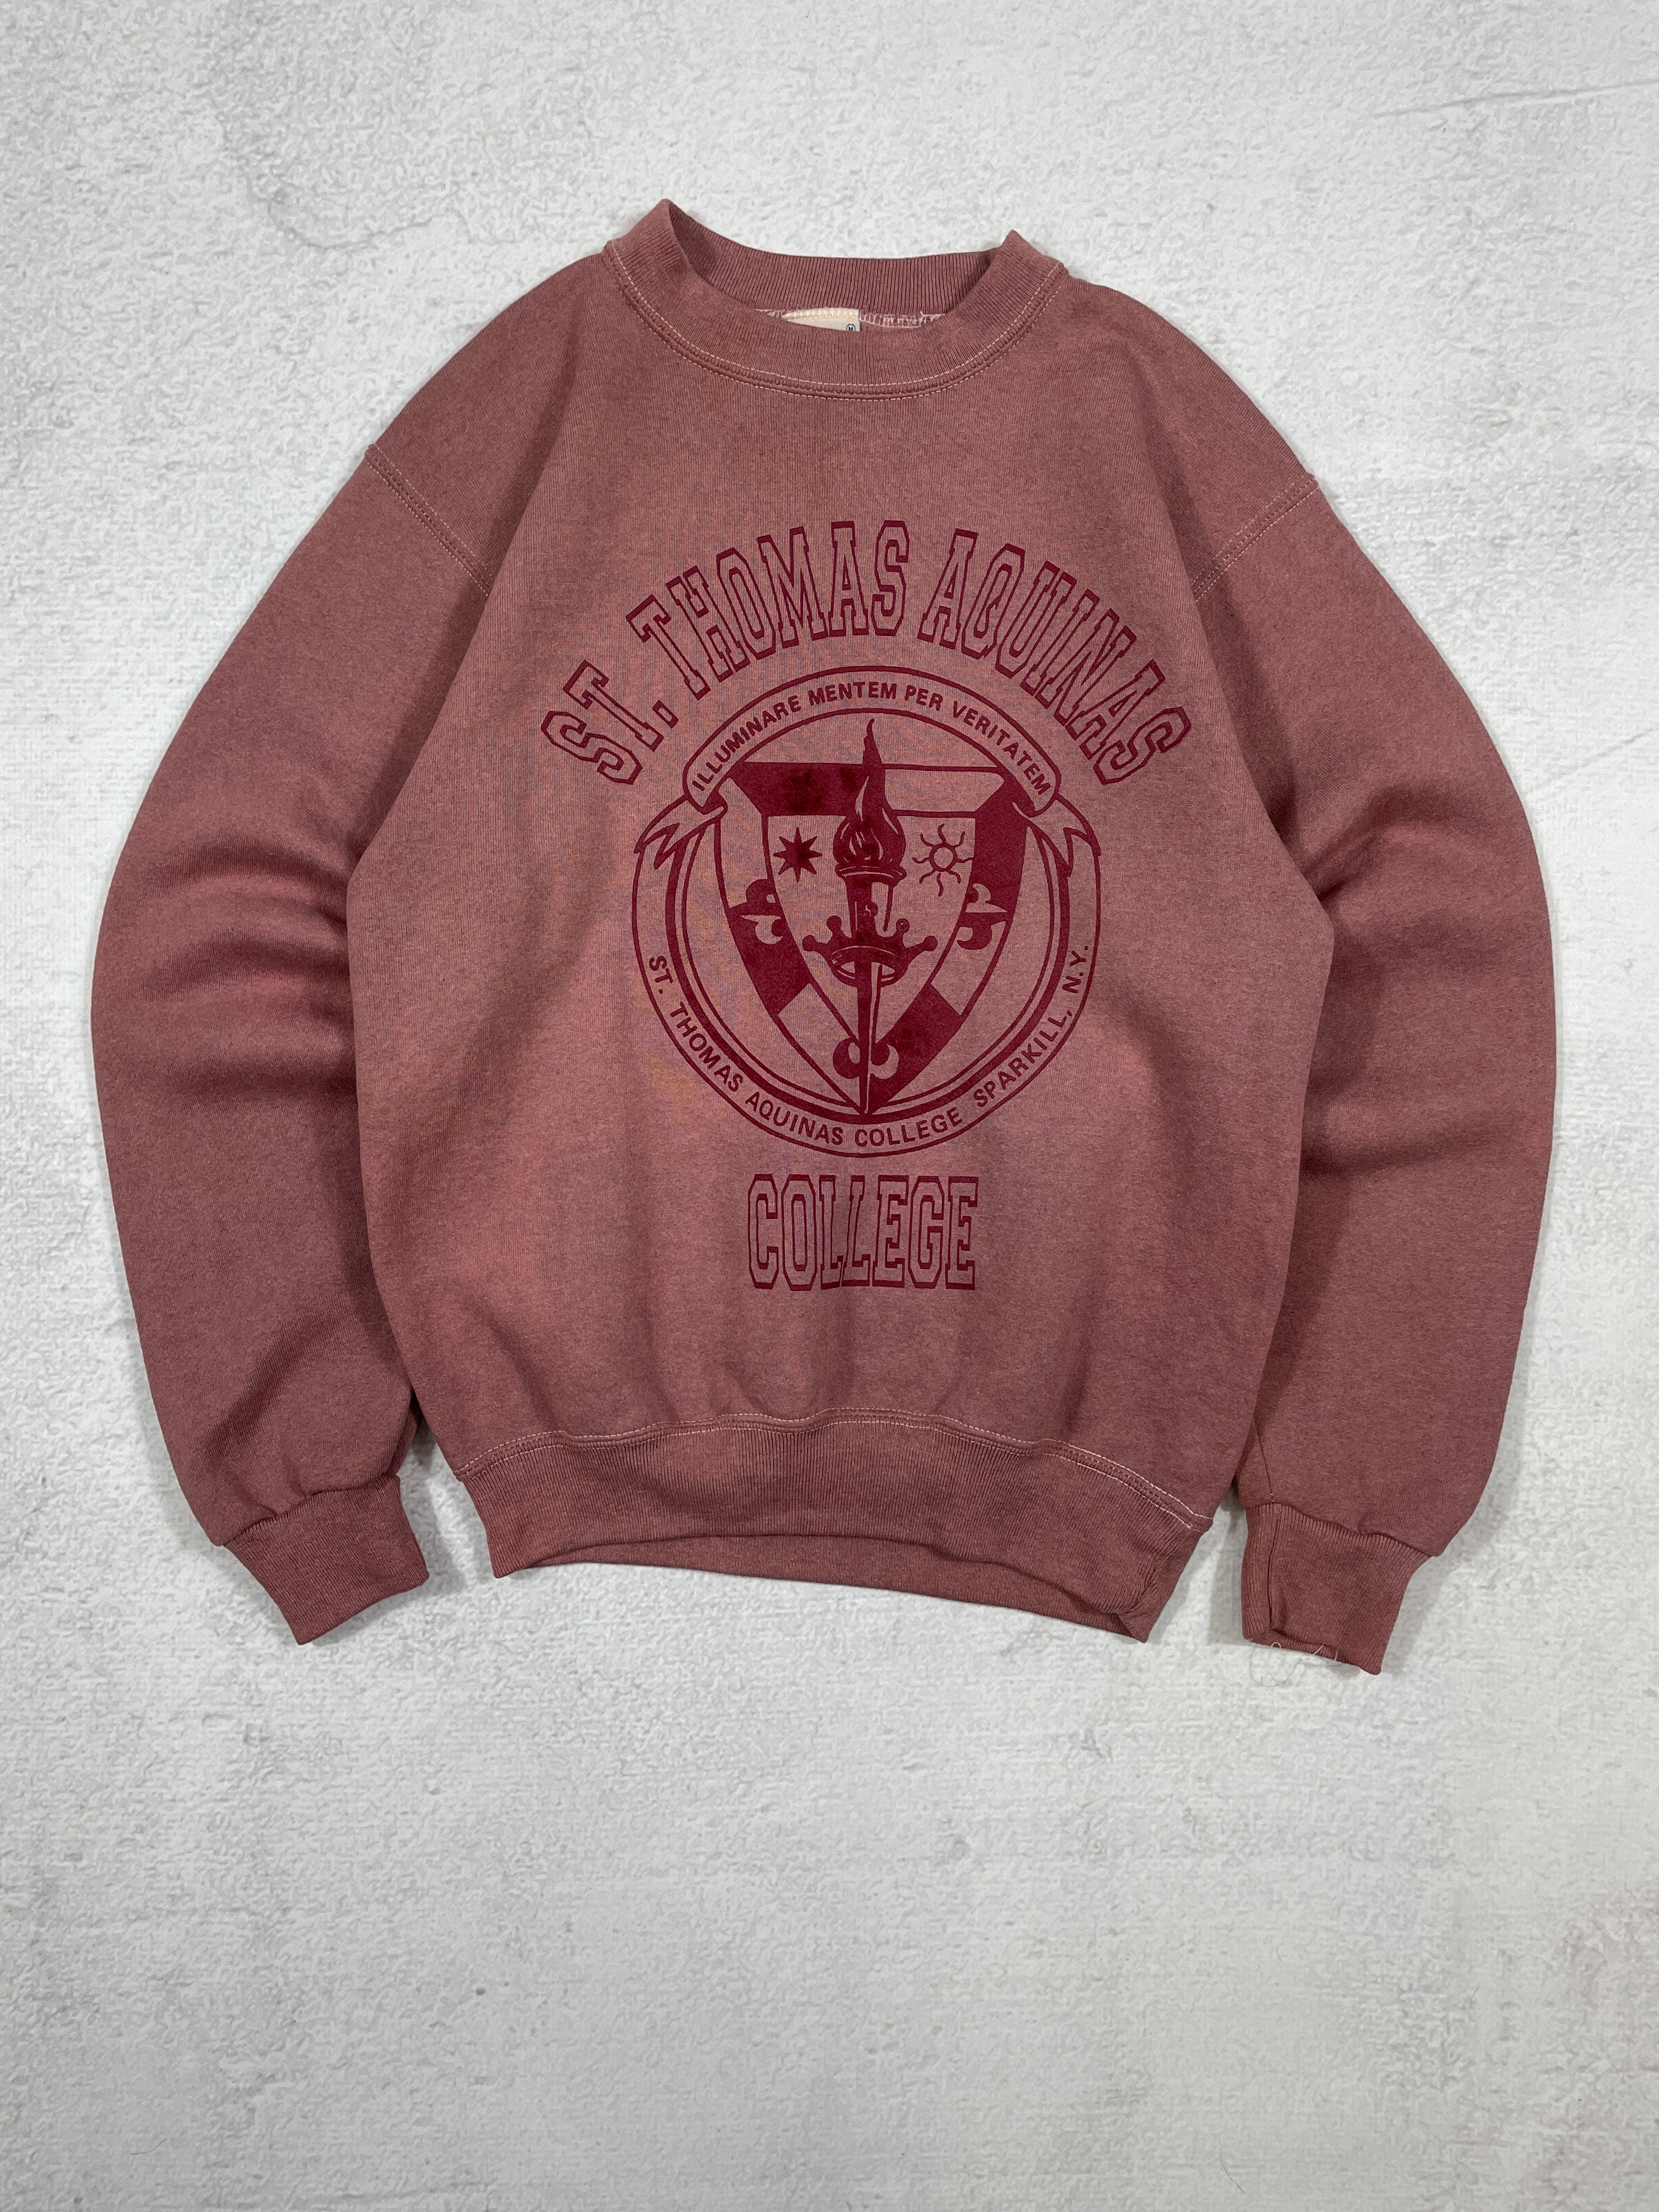 Vintage Dyed NCAA St. Thomas Aquinas College Crewneck Sweatshirt - Men's Medium